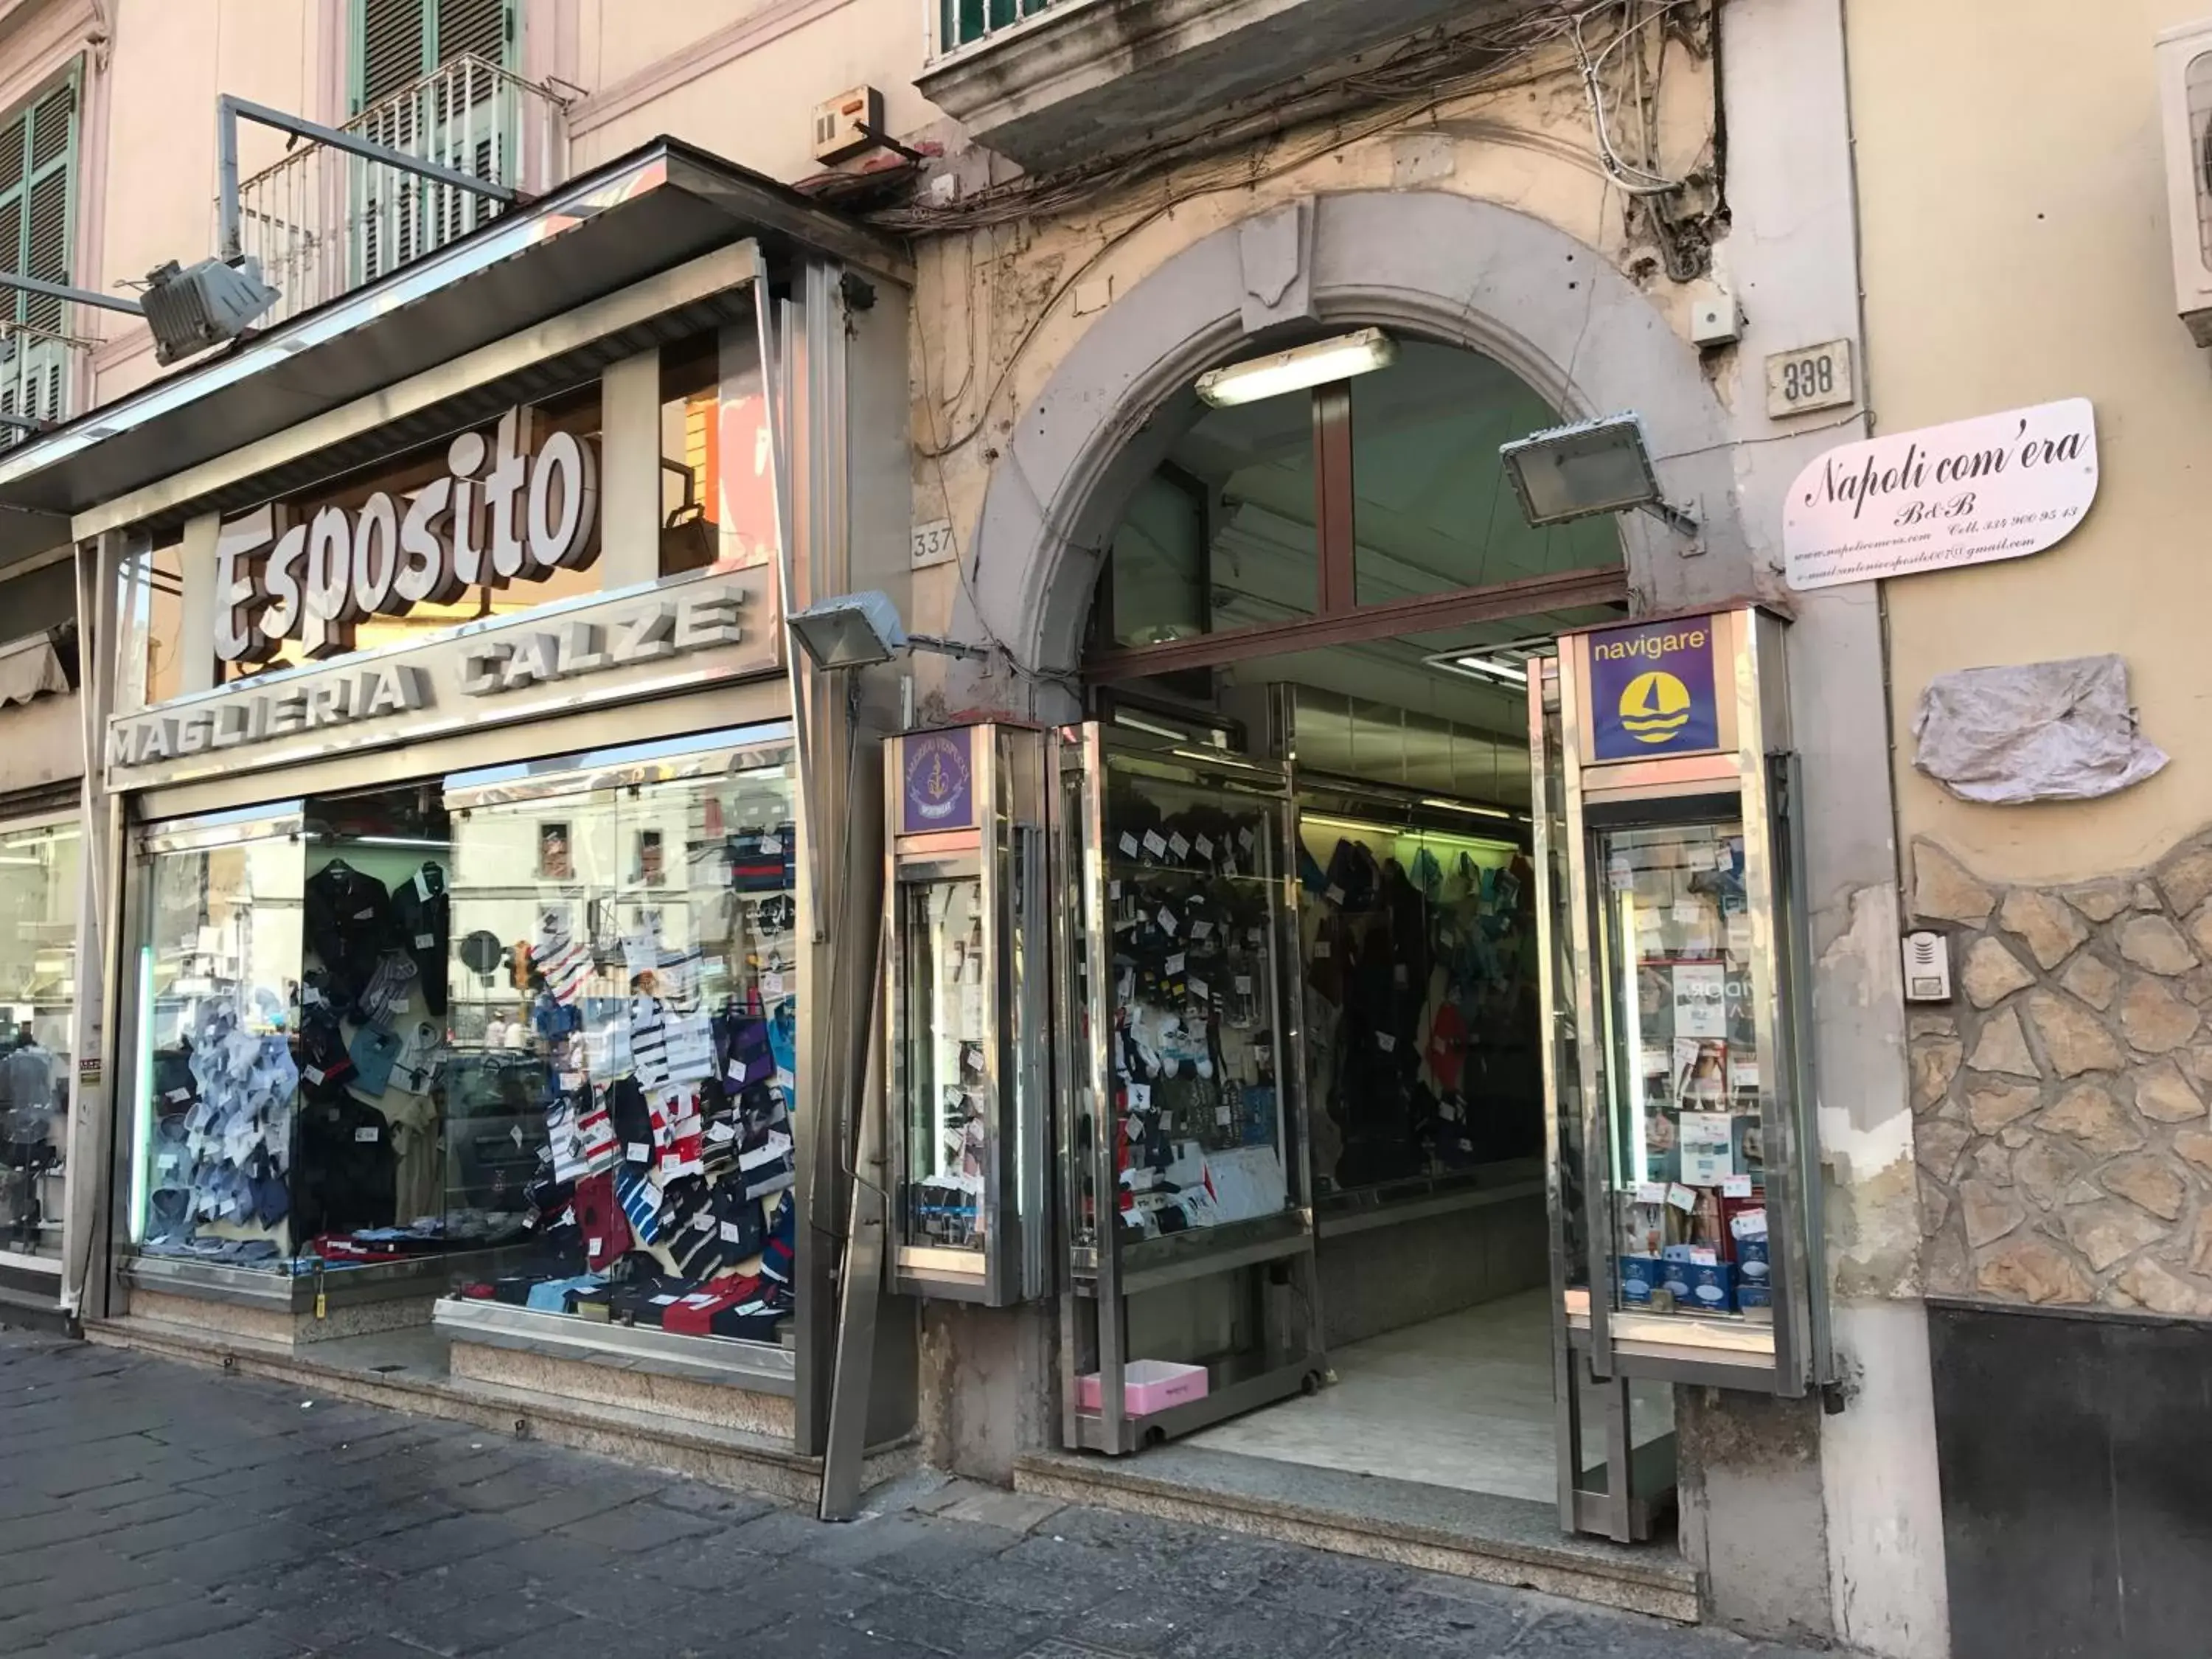 Supermarket/Shops in Napoli Com'era